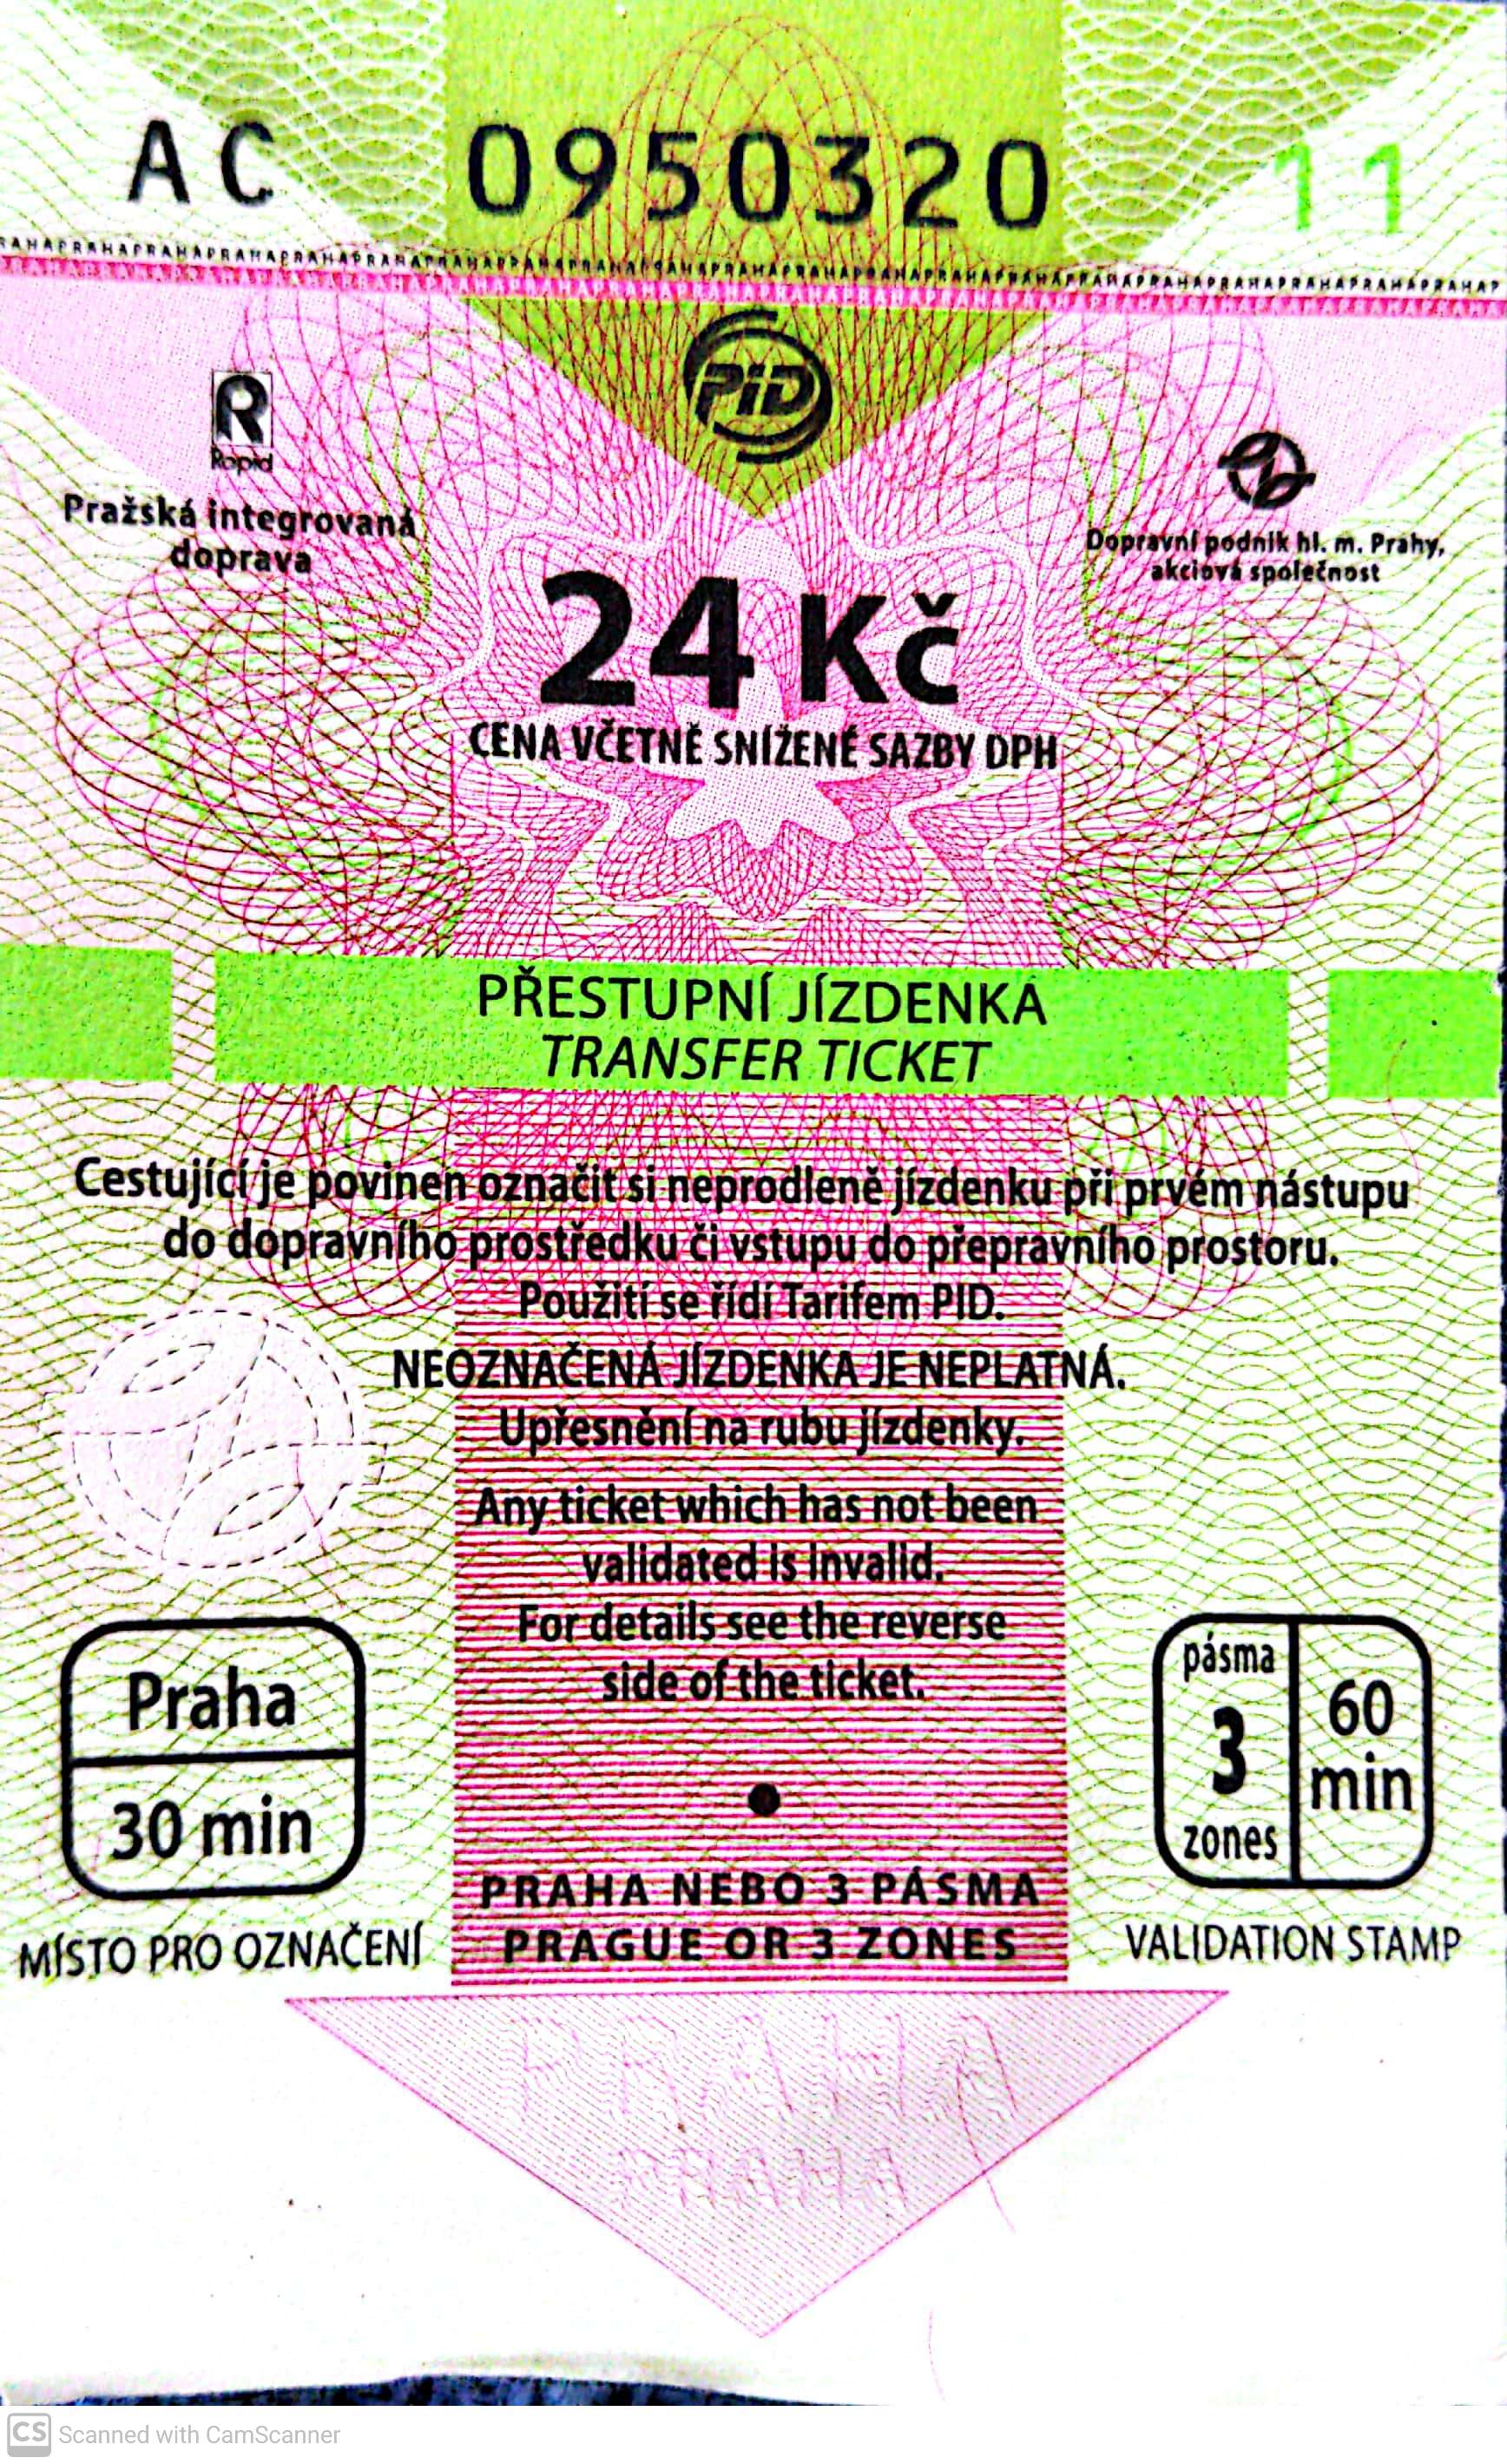 Metro ticket from Prague